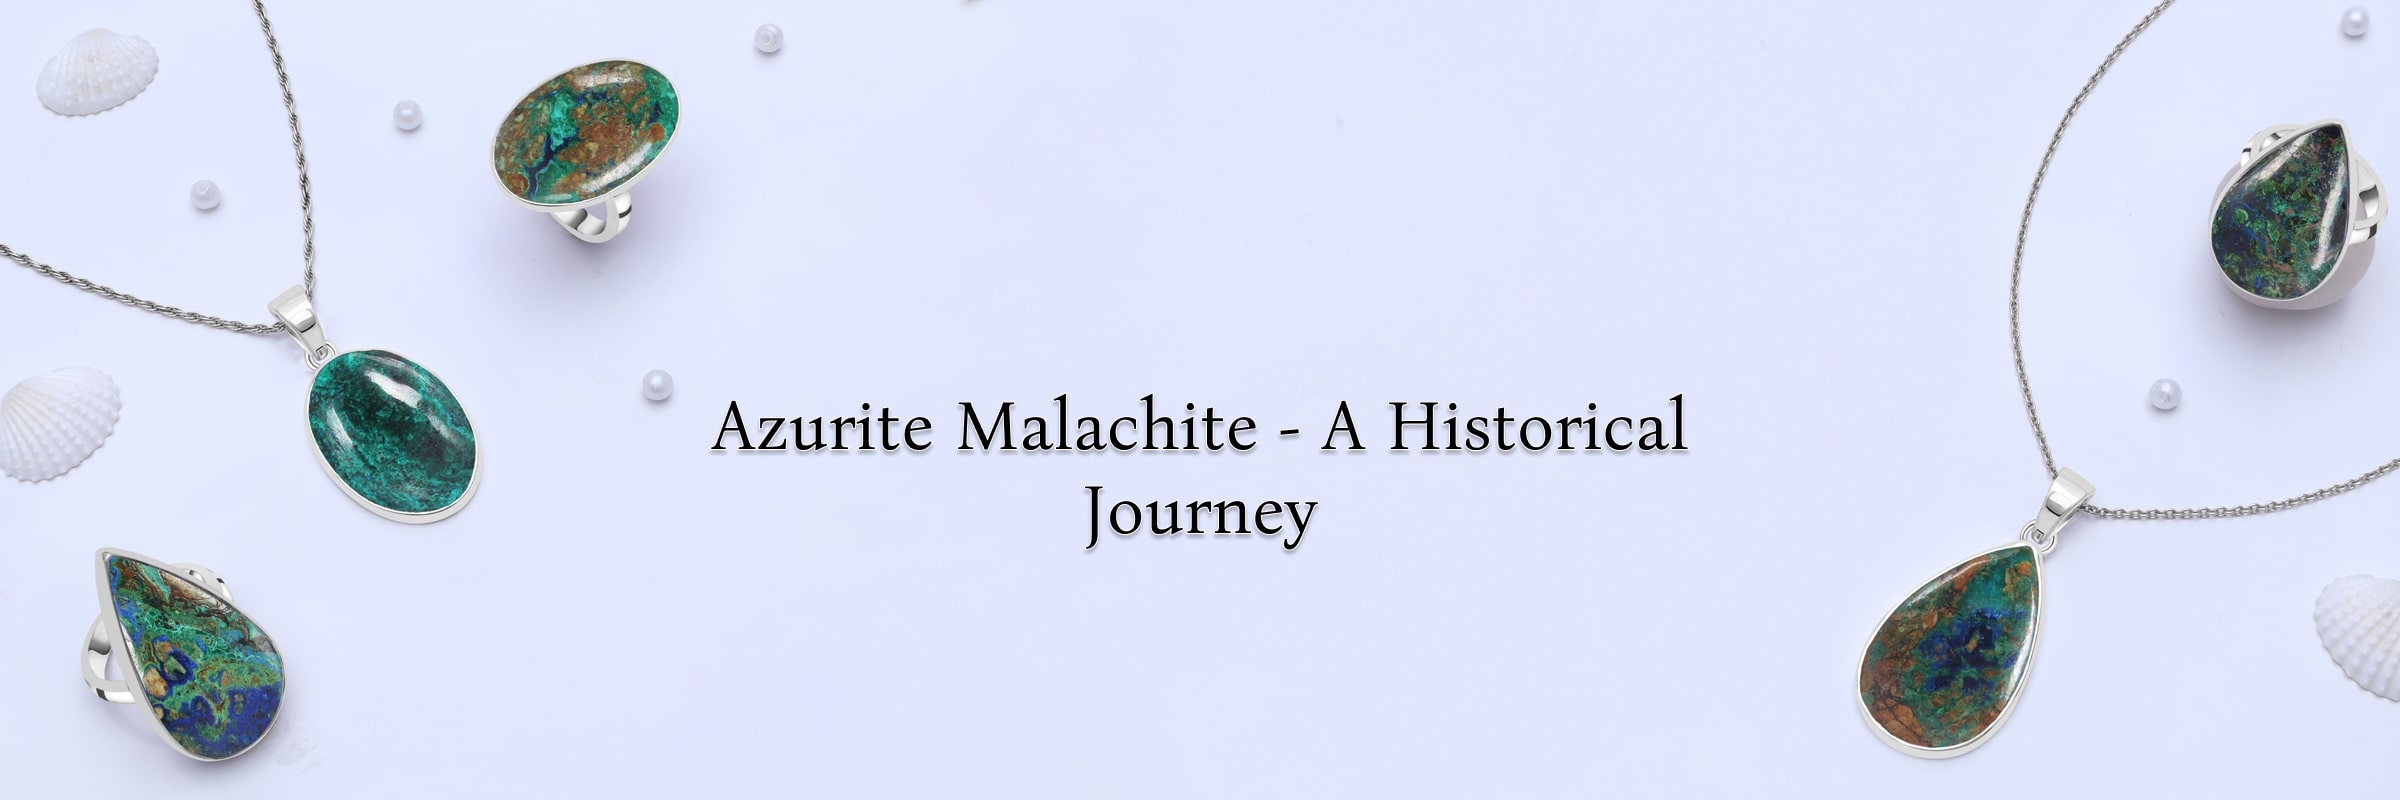 Azurite Malachite History